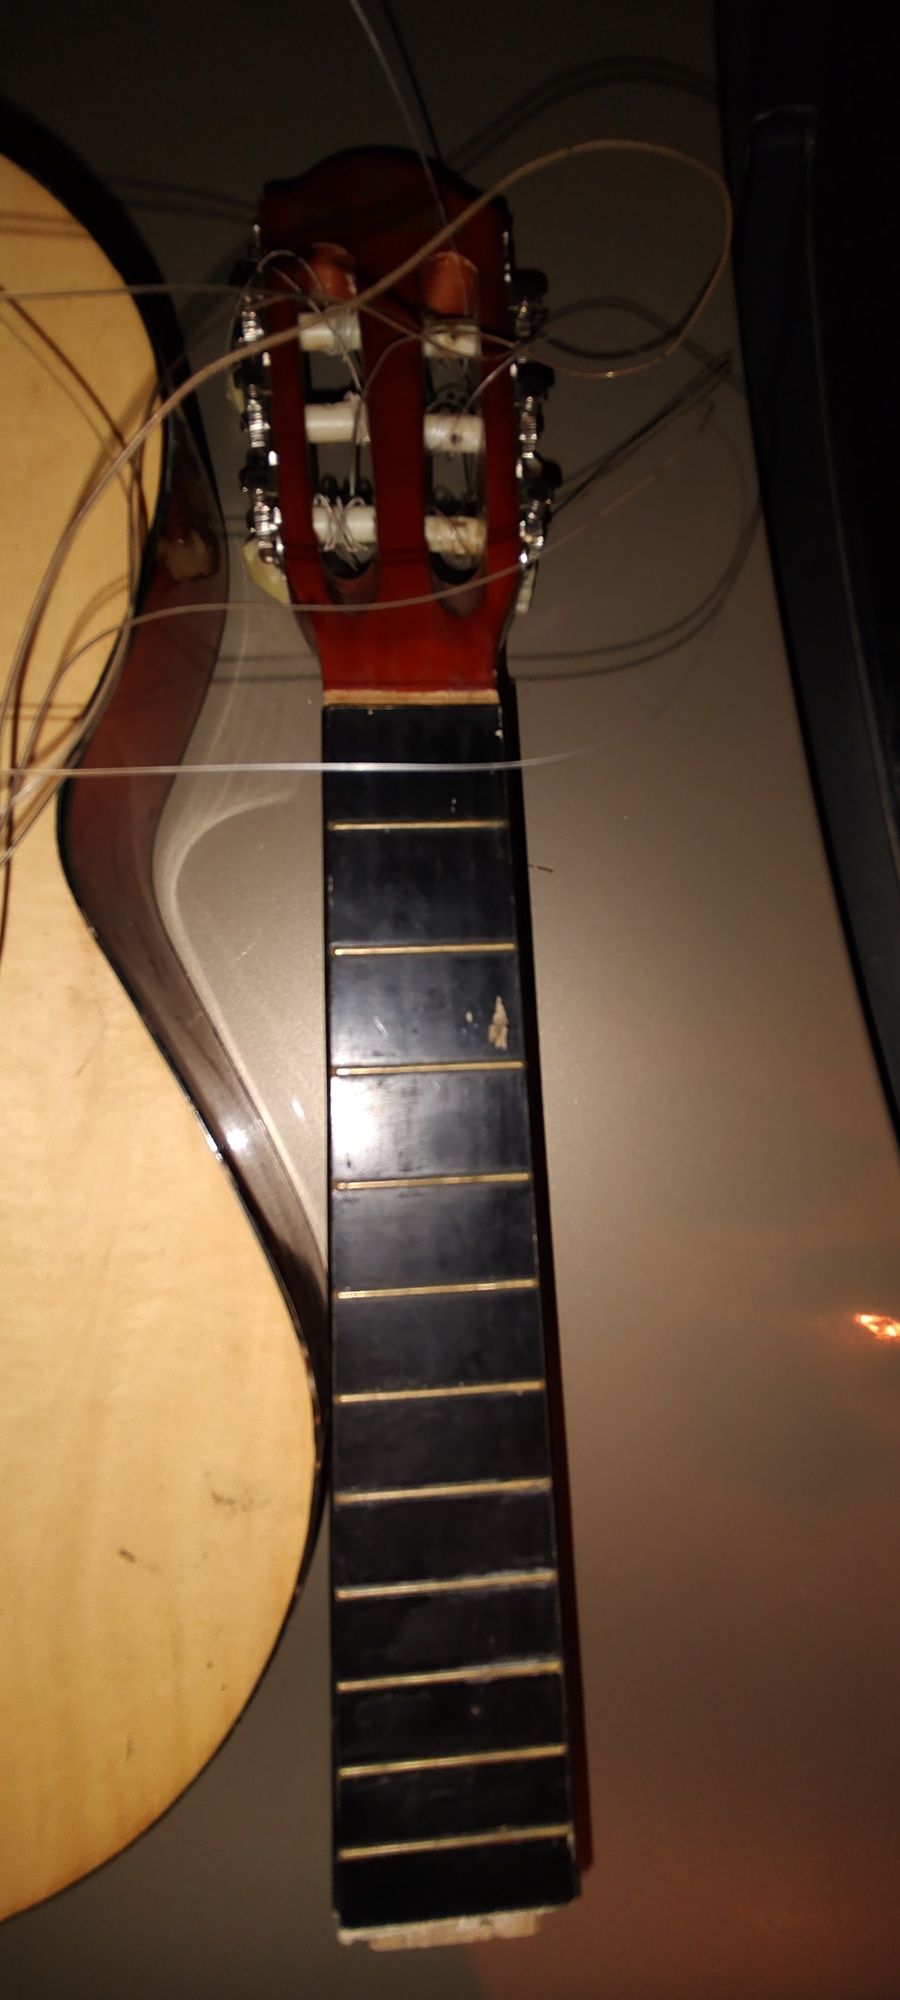 Vând chitară Delson cu corzi și grif
Marca Utok 80 cm. defec